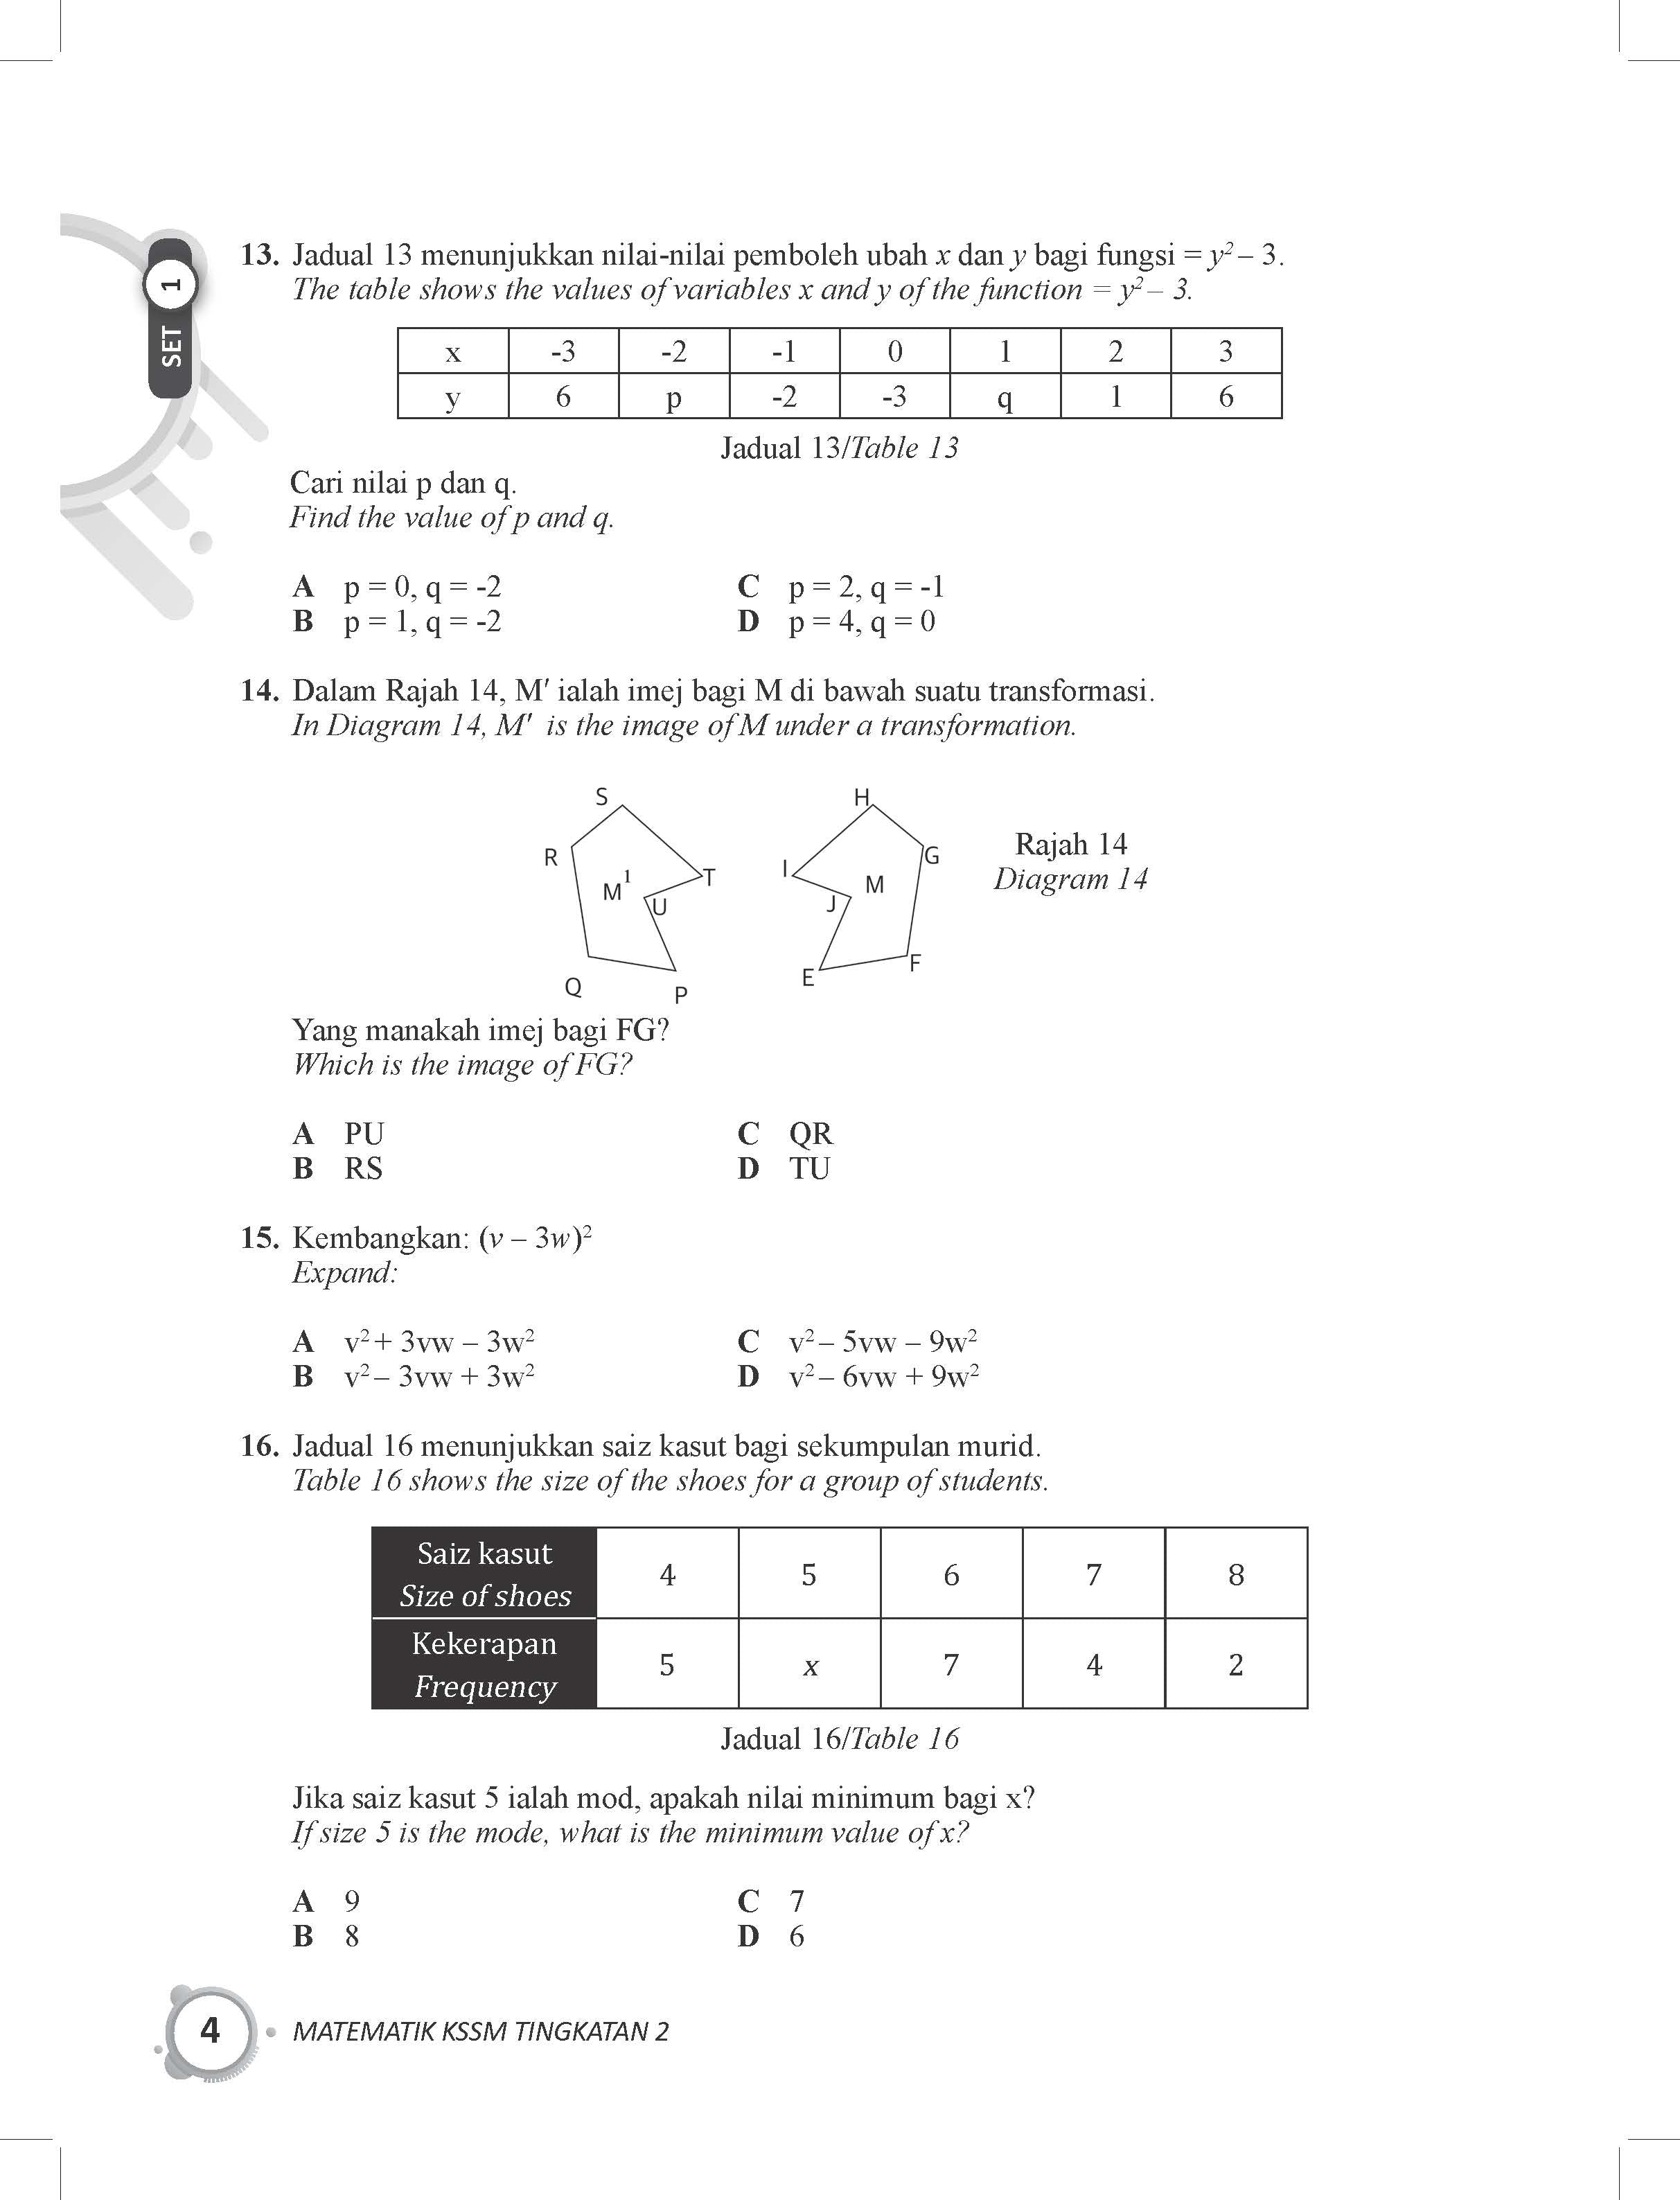 Get Smart Modul Soalan Matematik Tingkatan 2 - (TBBS1167)